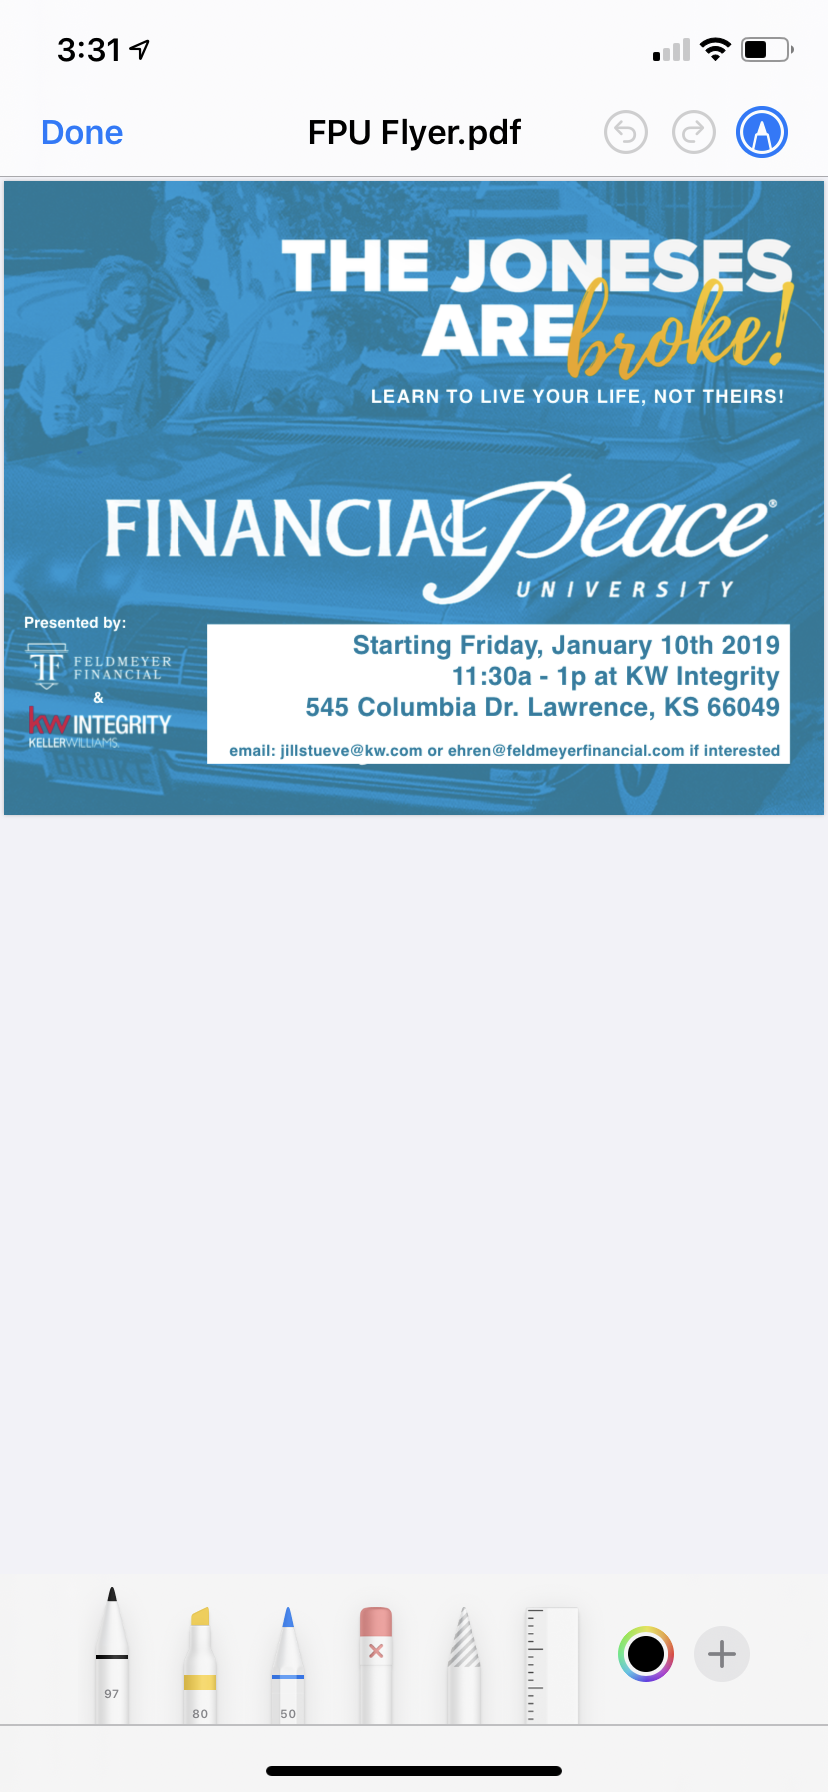 Financial Peace University with Feldmeyer Financial 